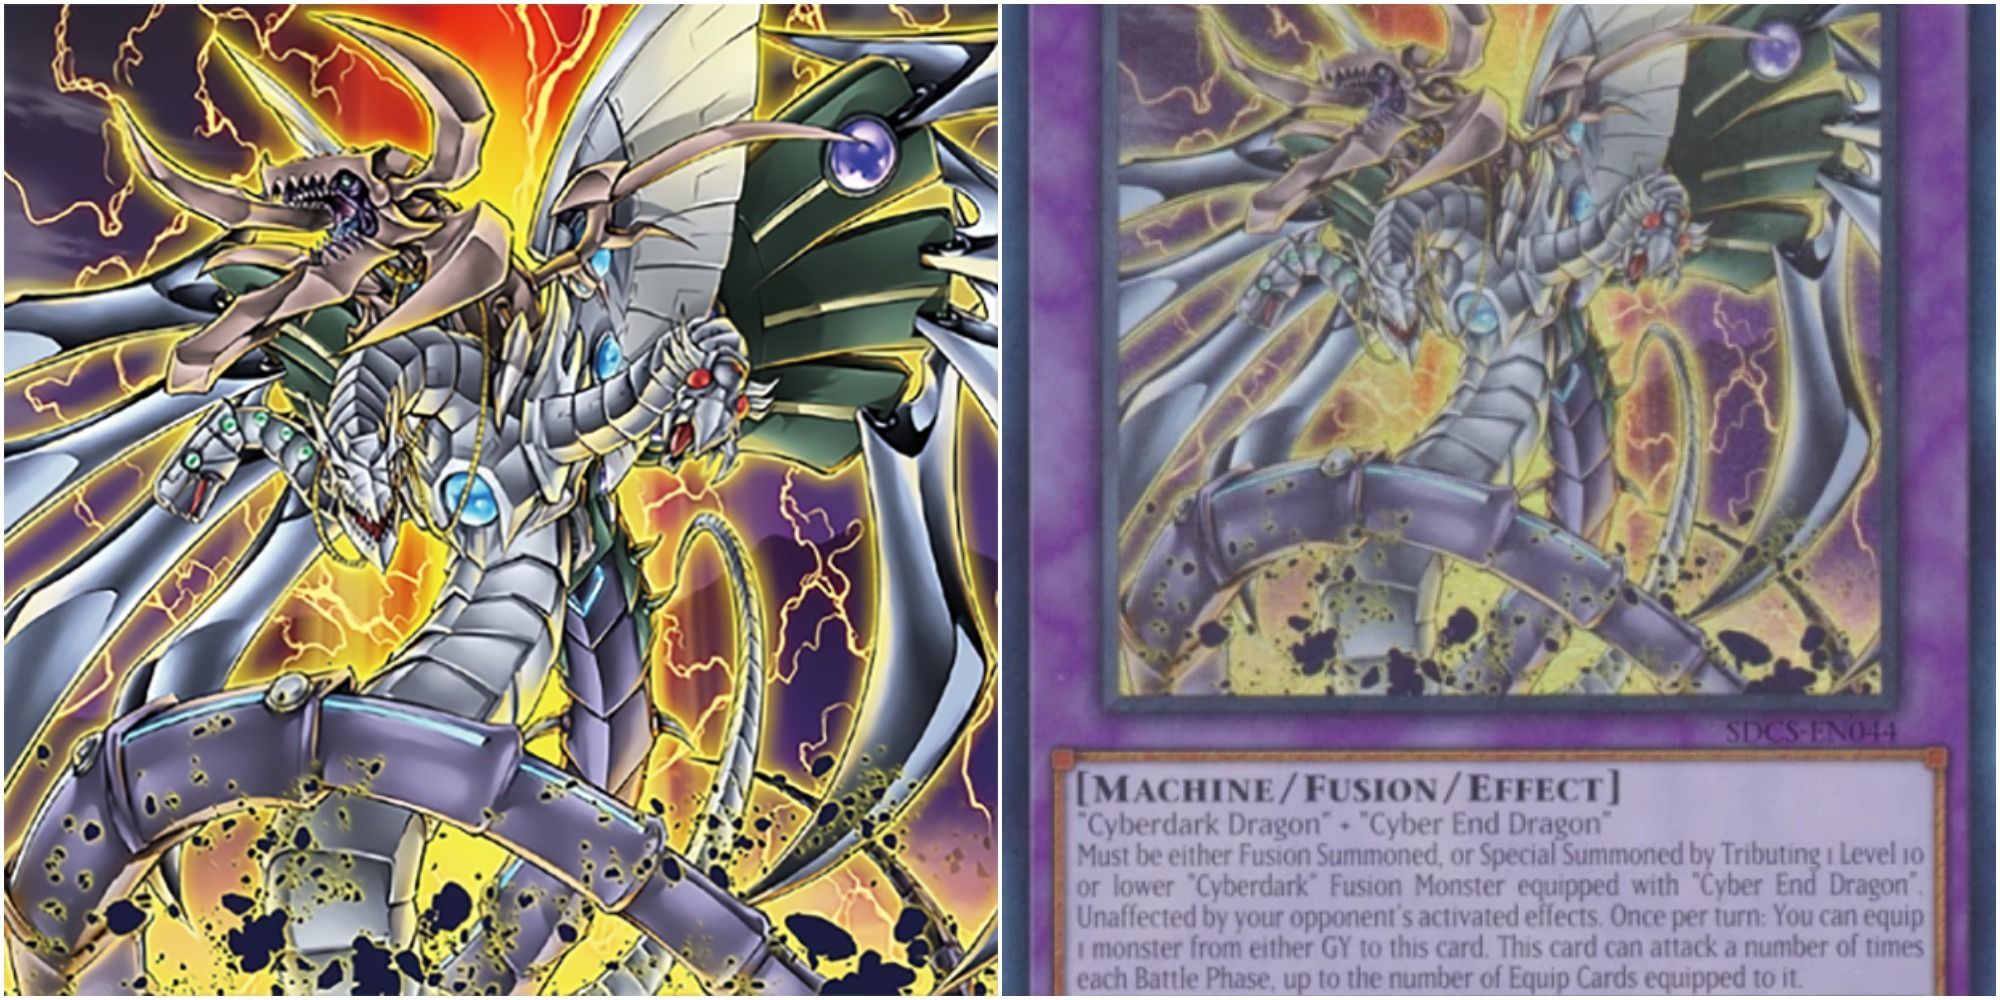 yugioh Cyberdark End Dragon card art and text